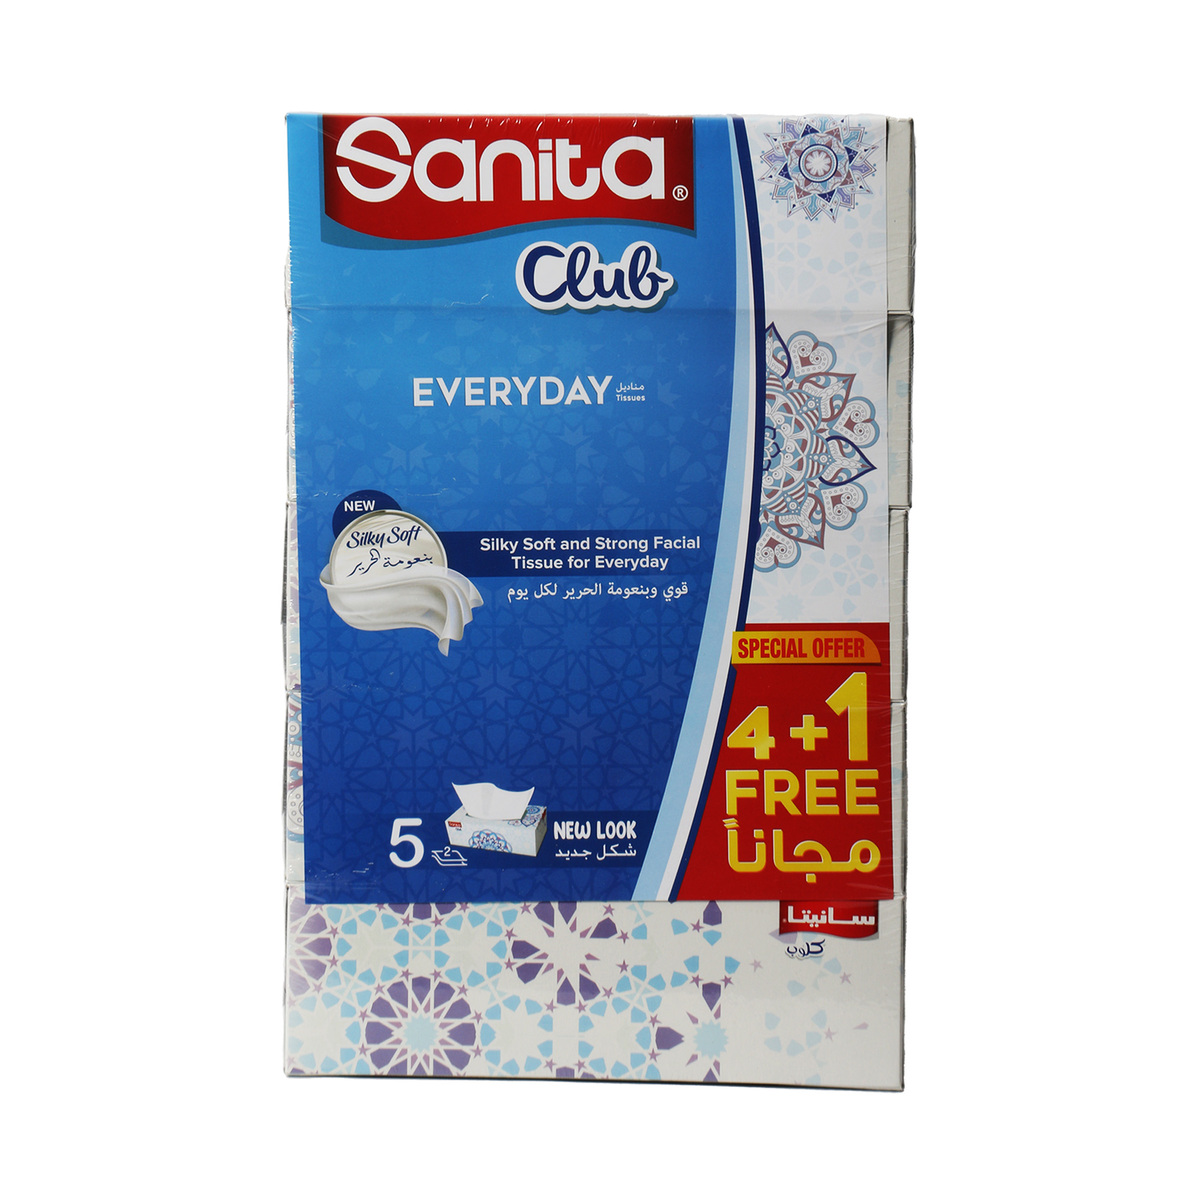 Sanita Club Facial Tissue 2ply 150 Sheet 4 + 1